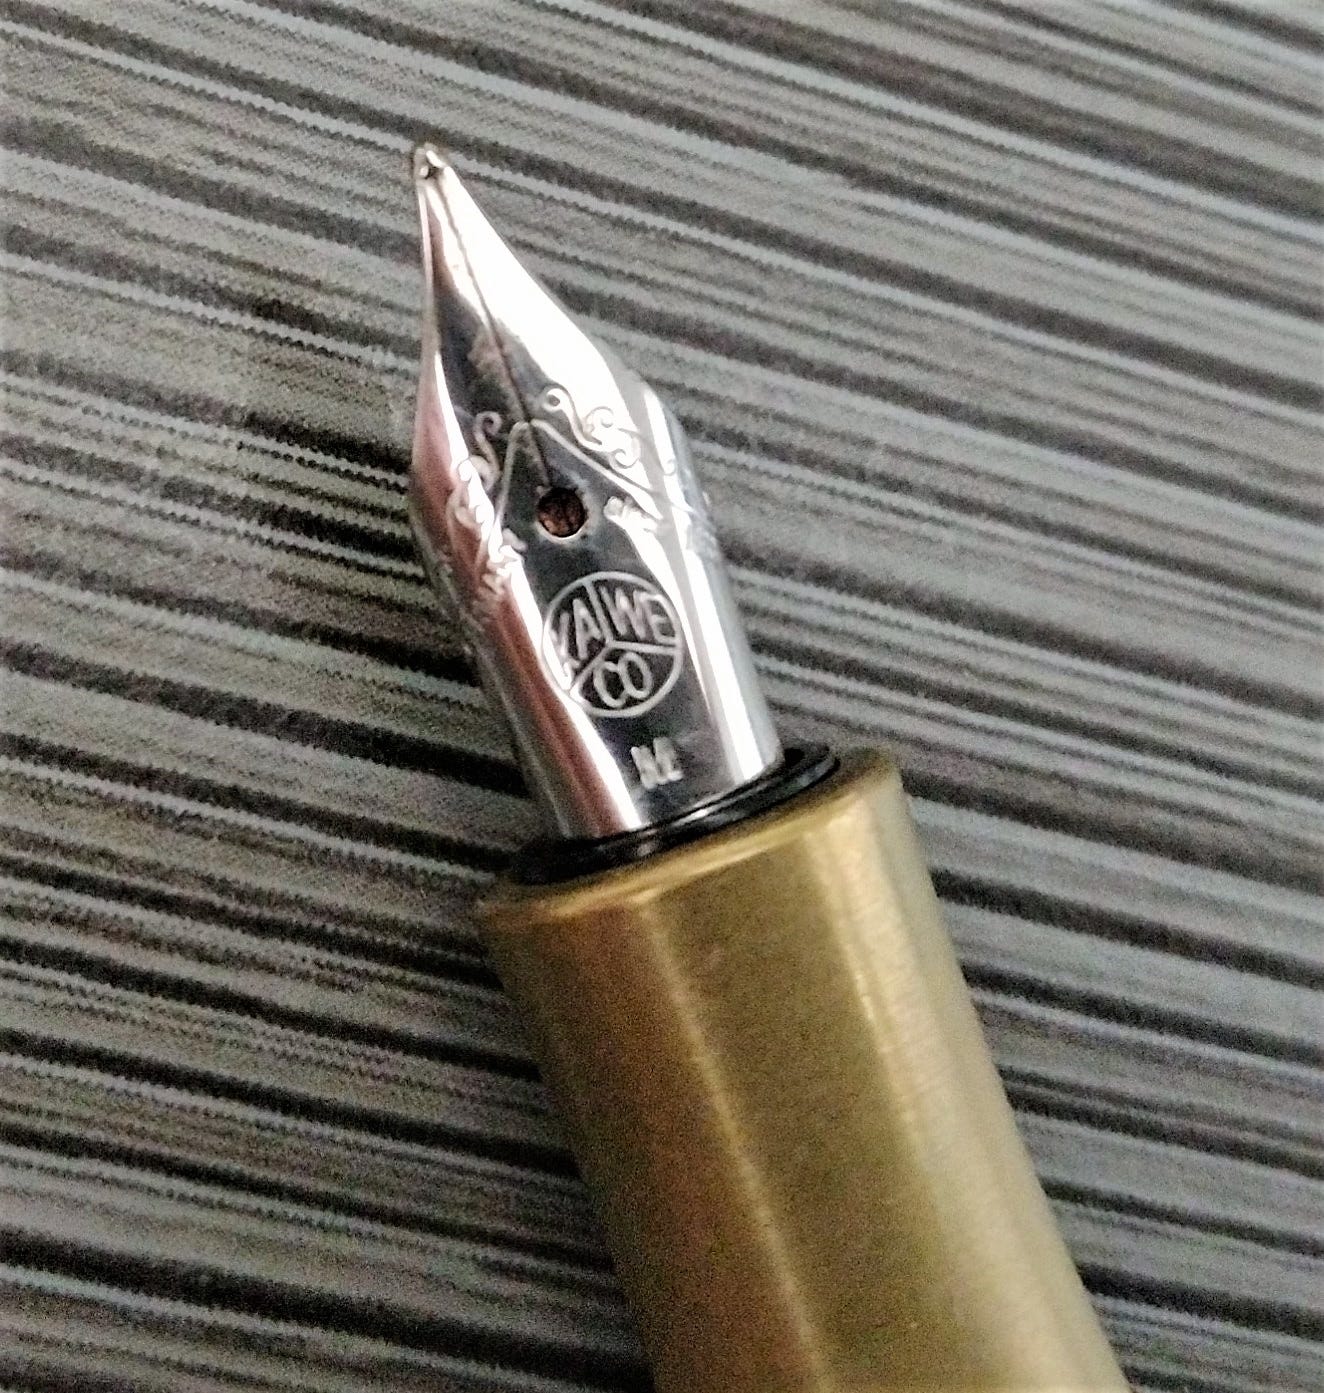 Metacil Replacement Tip – Tokyo Pen Shop